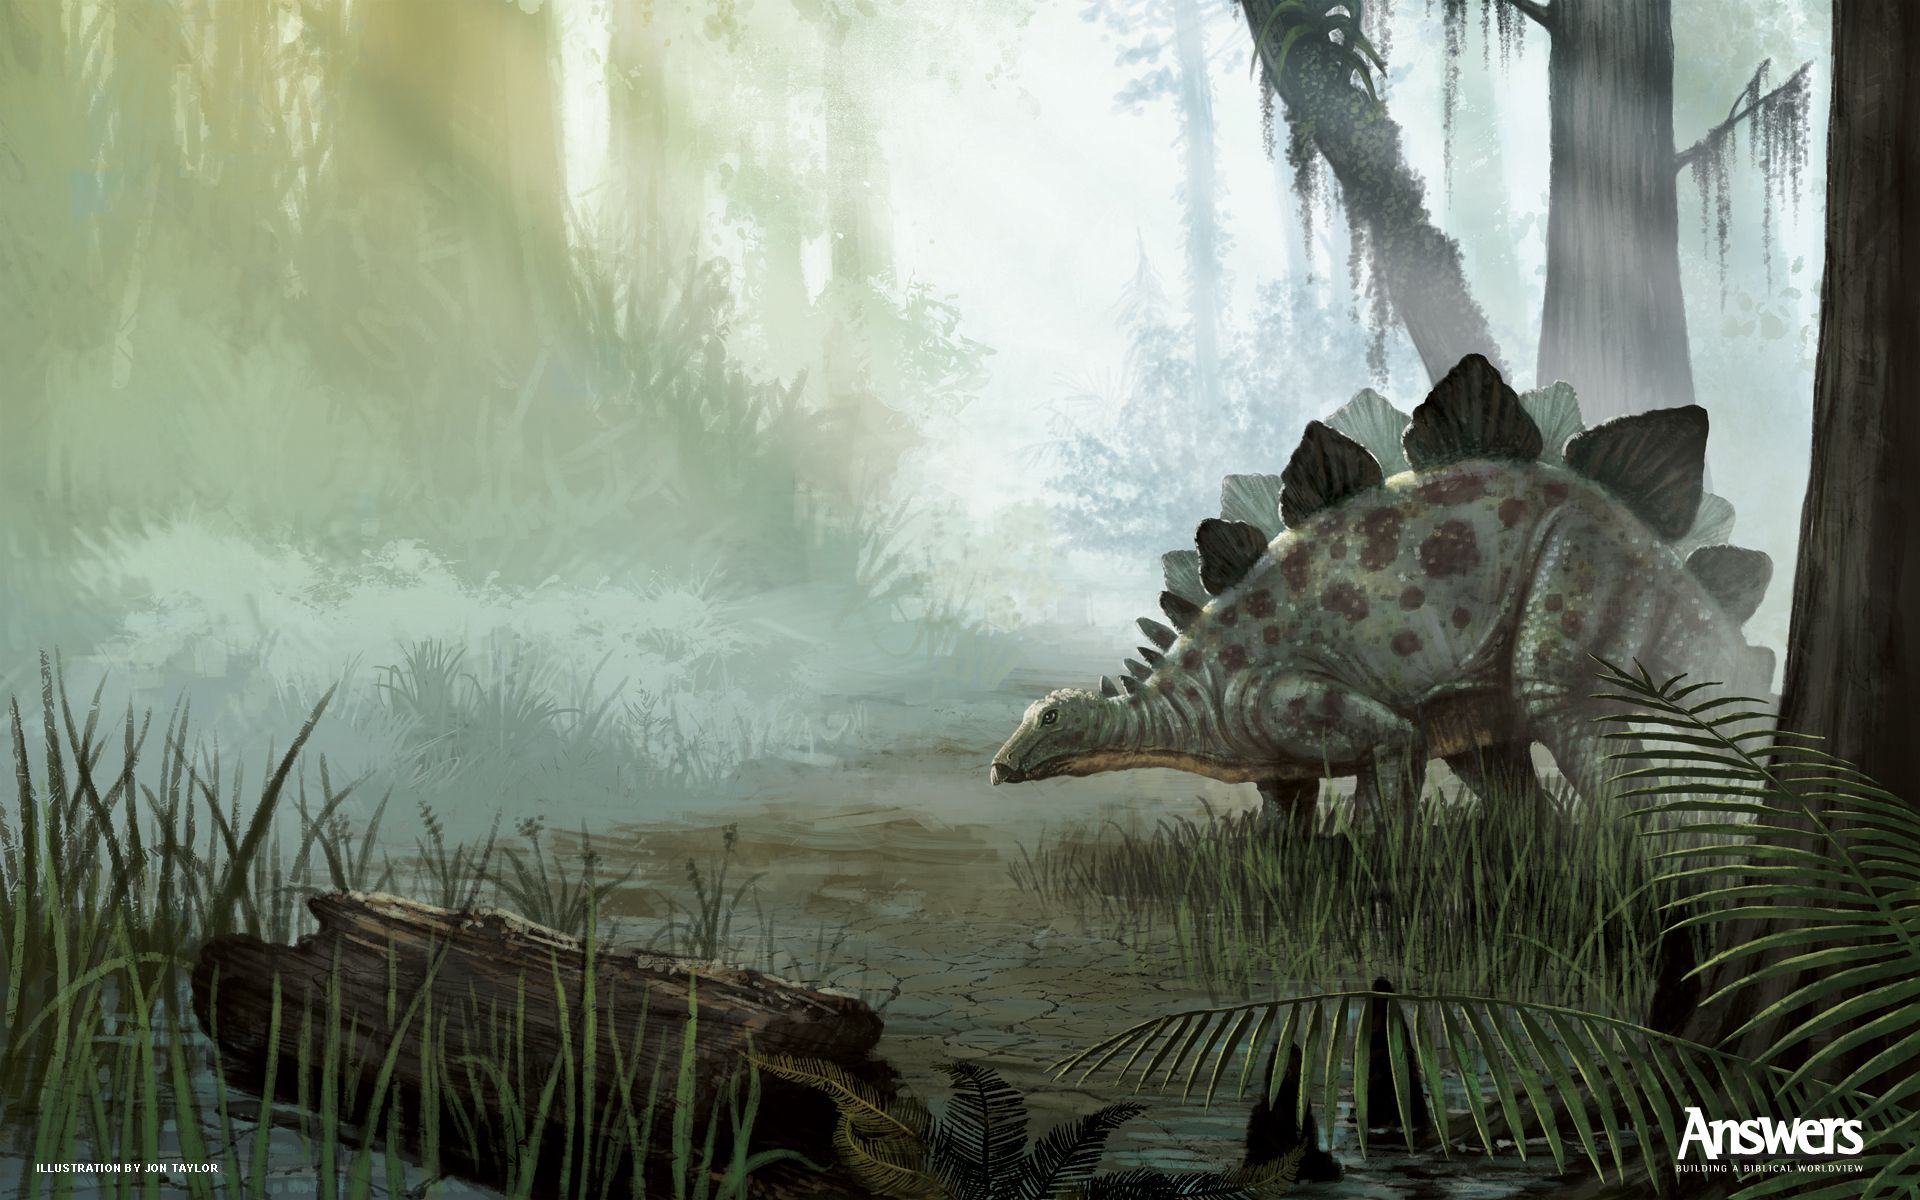 Free Desktop Dinosaur Wallpaper Answers in Genesis